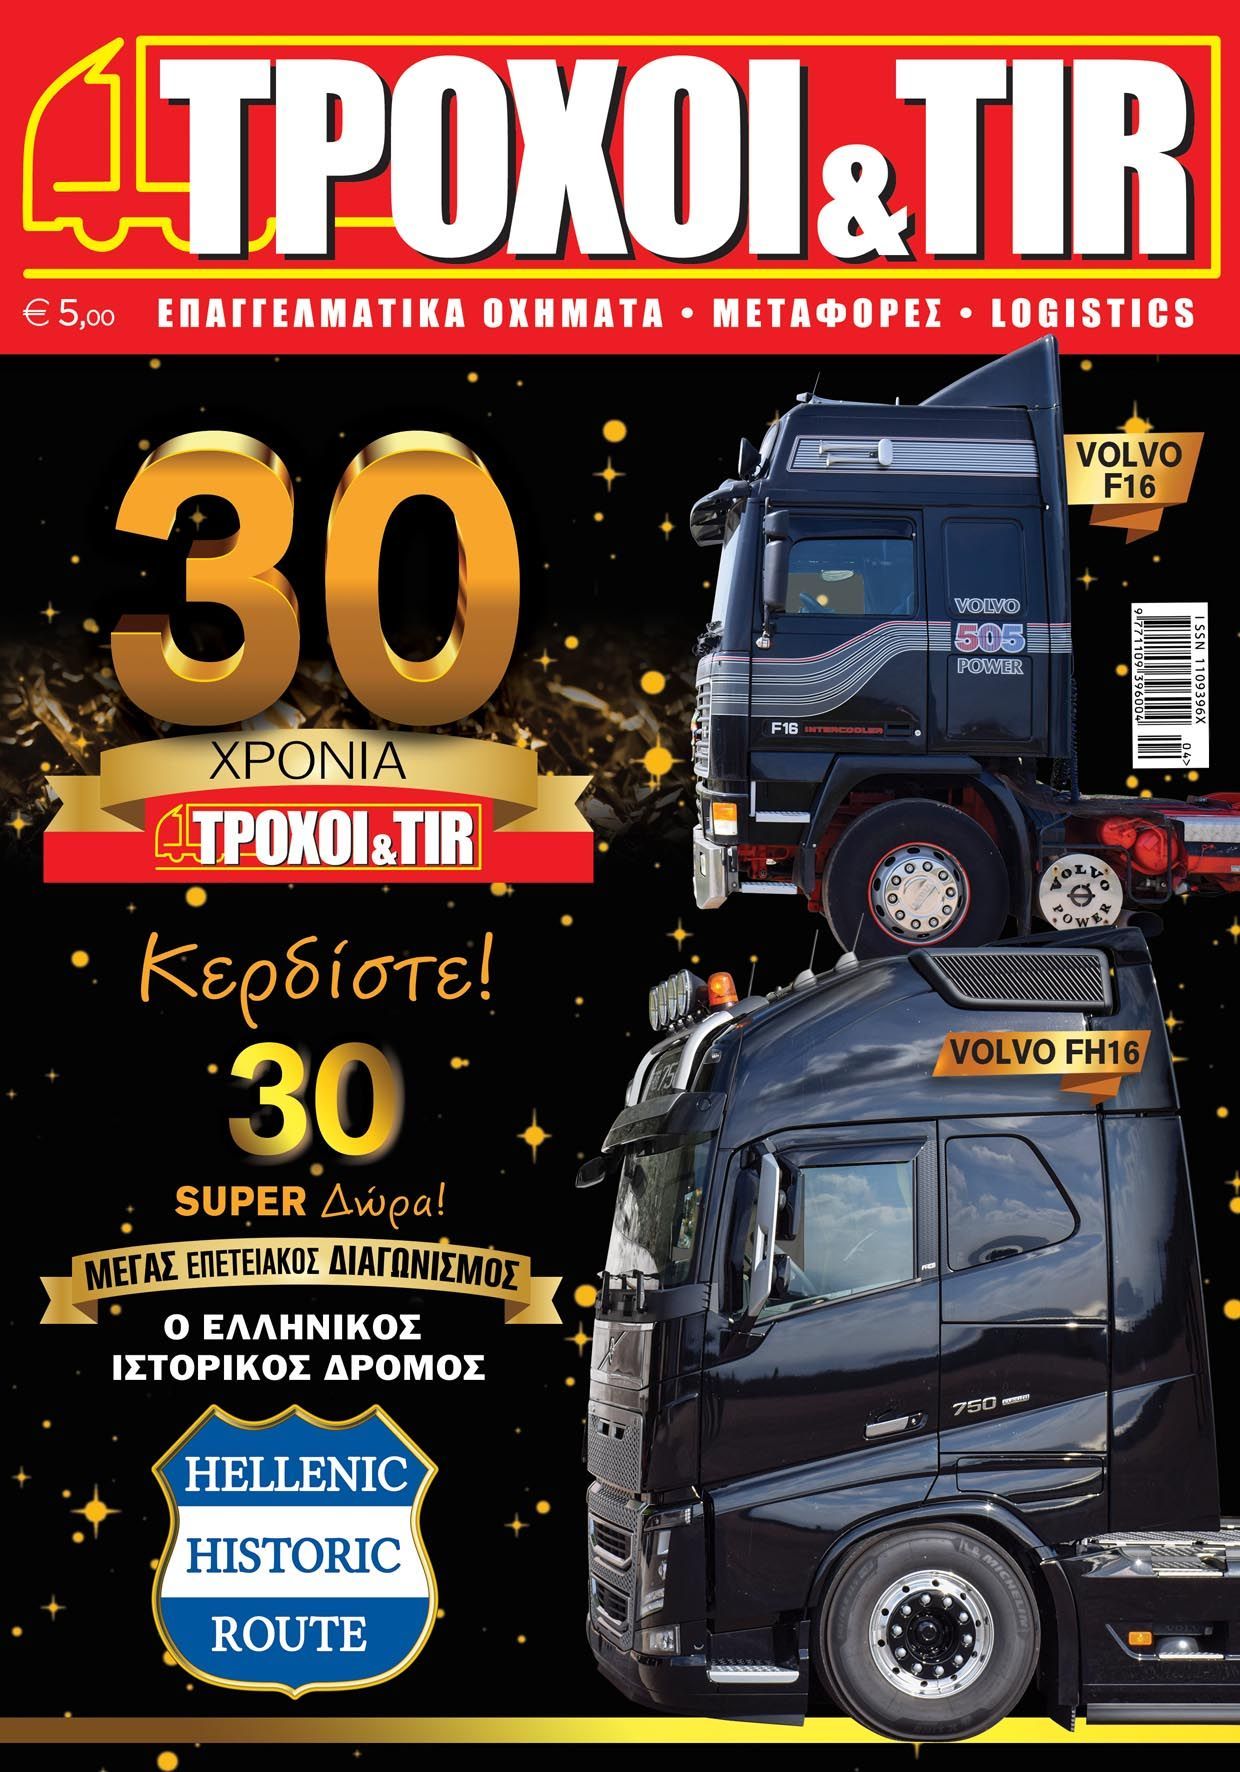 Troxoikaitir issue 348 april 2017 cover